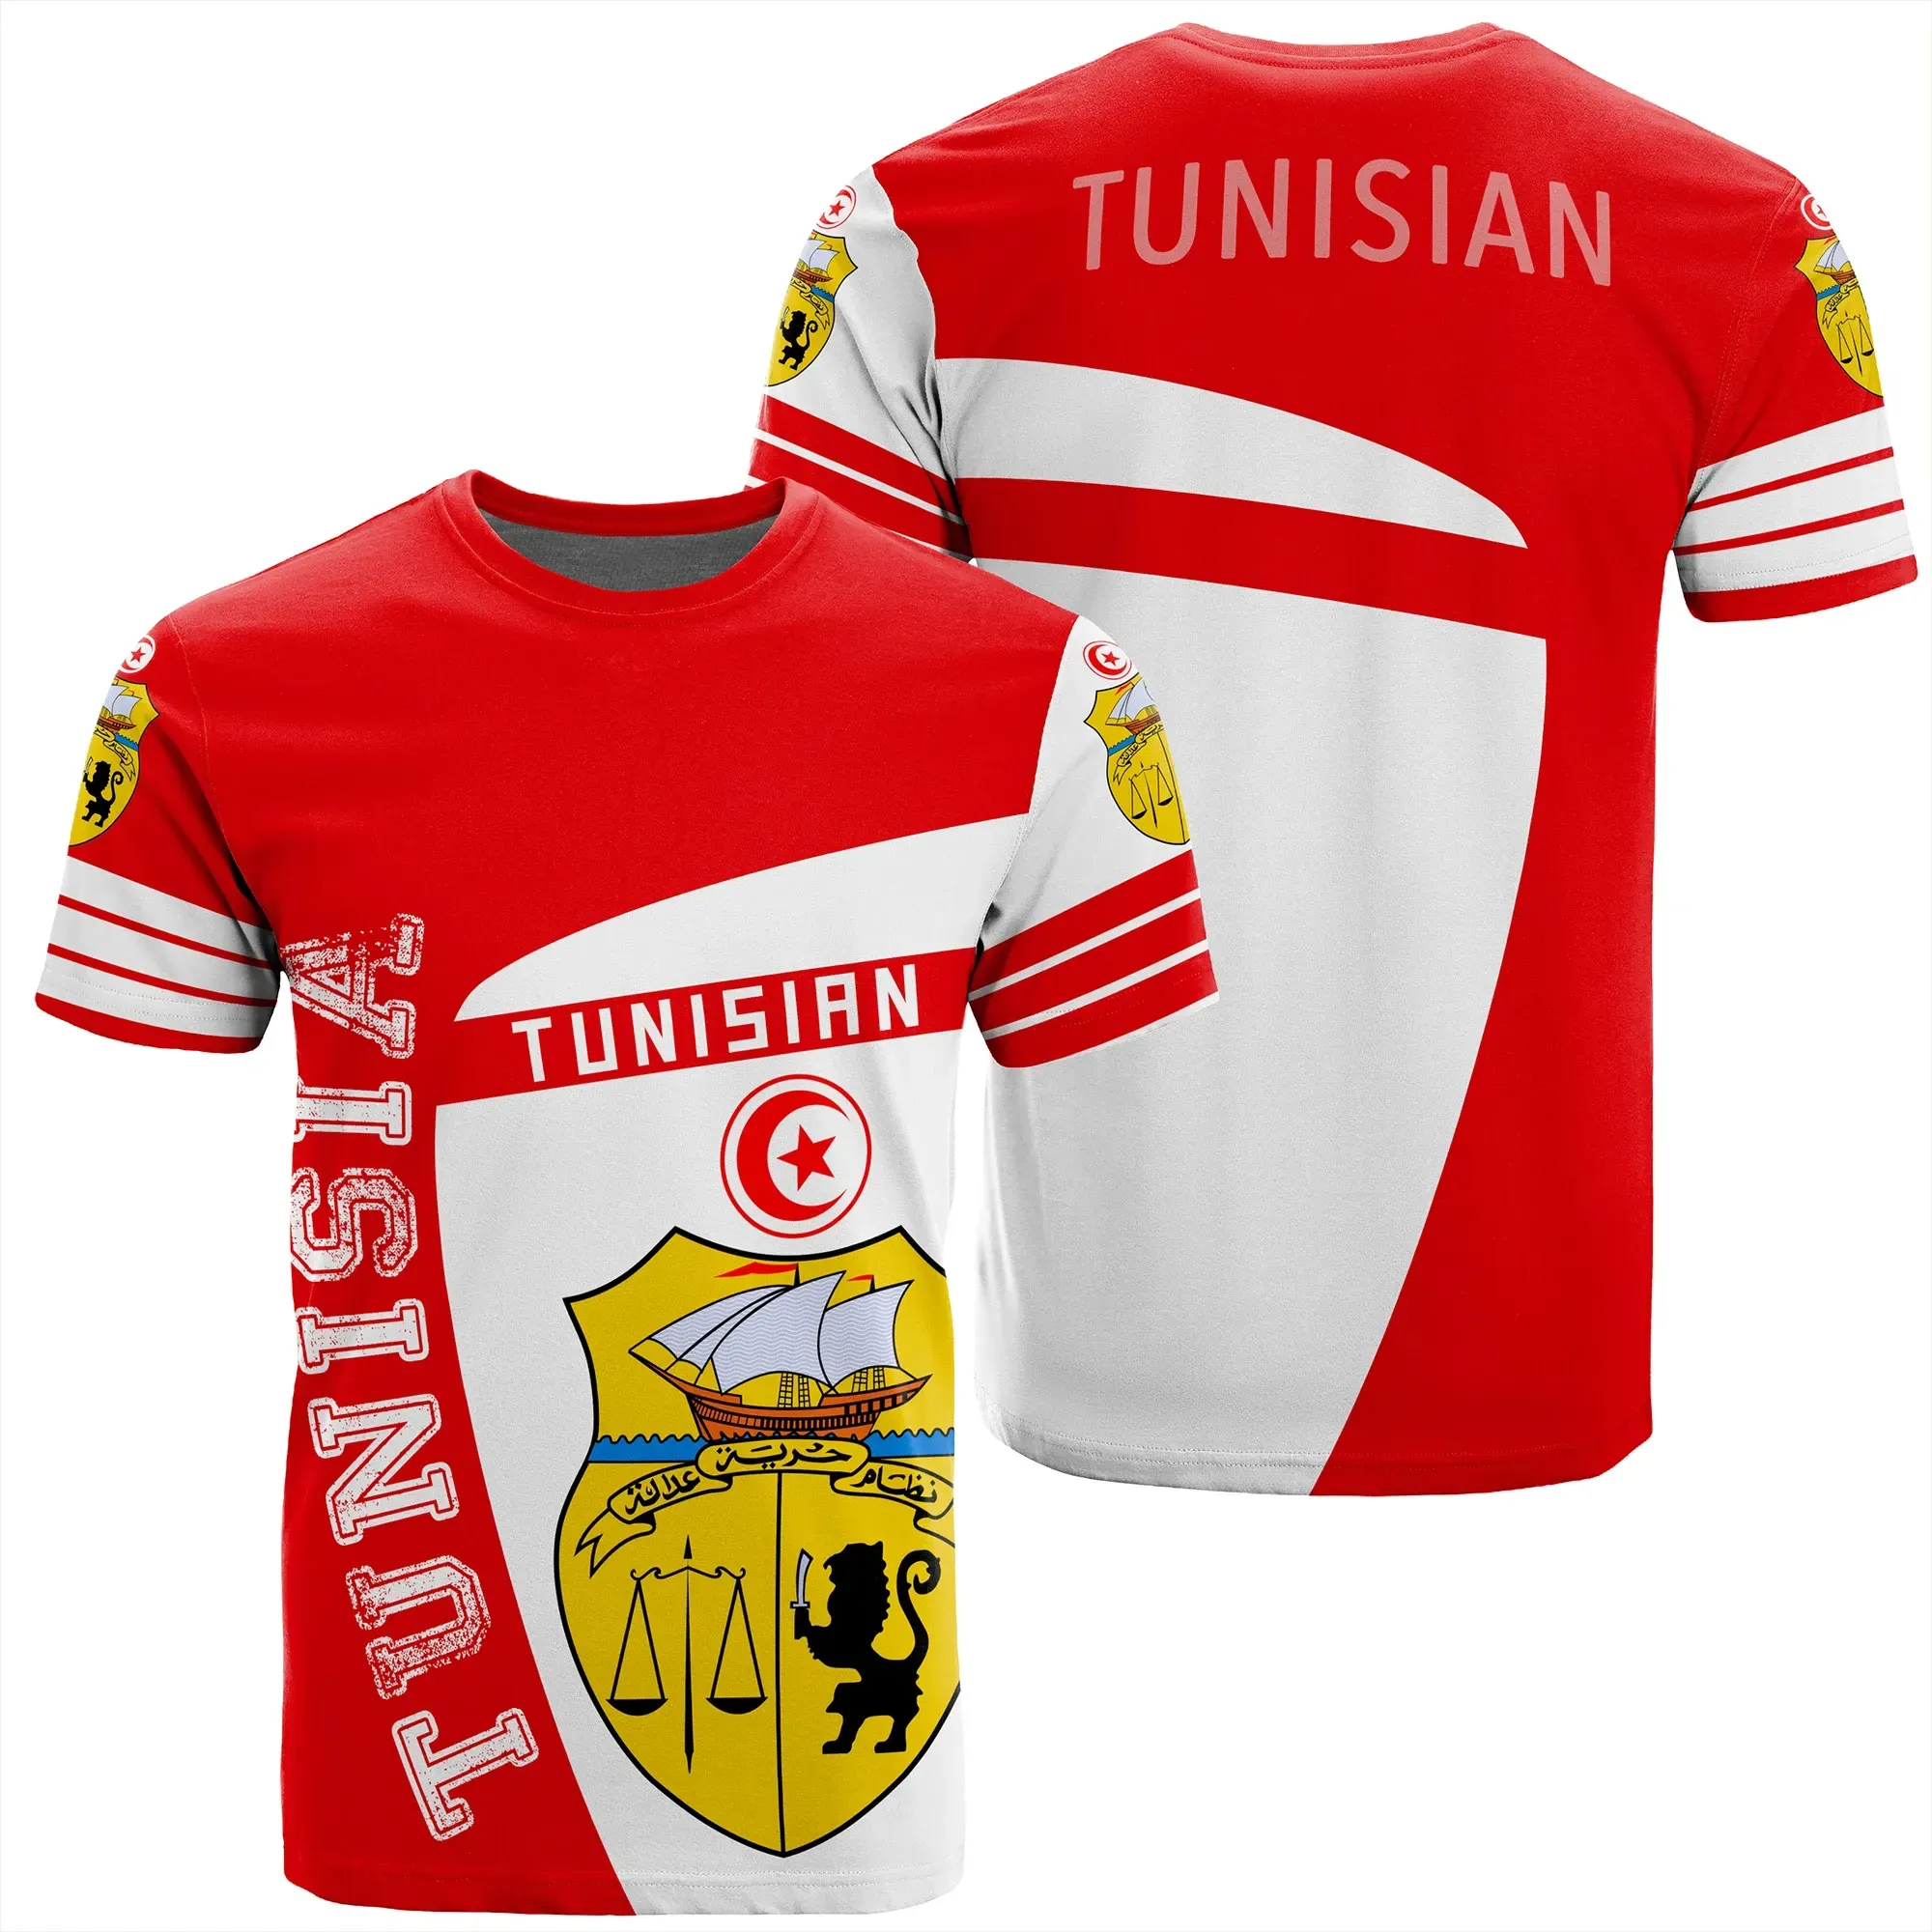 African T-shirt – Tunisia Sport Premium Tee